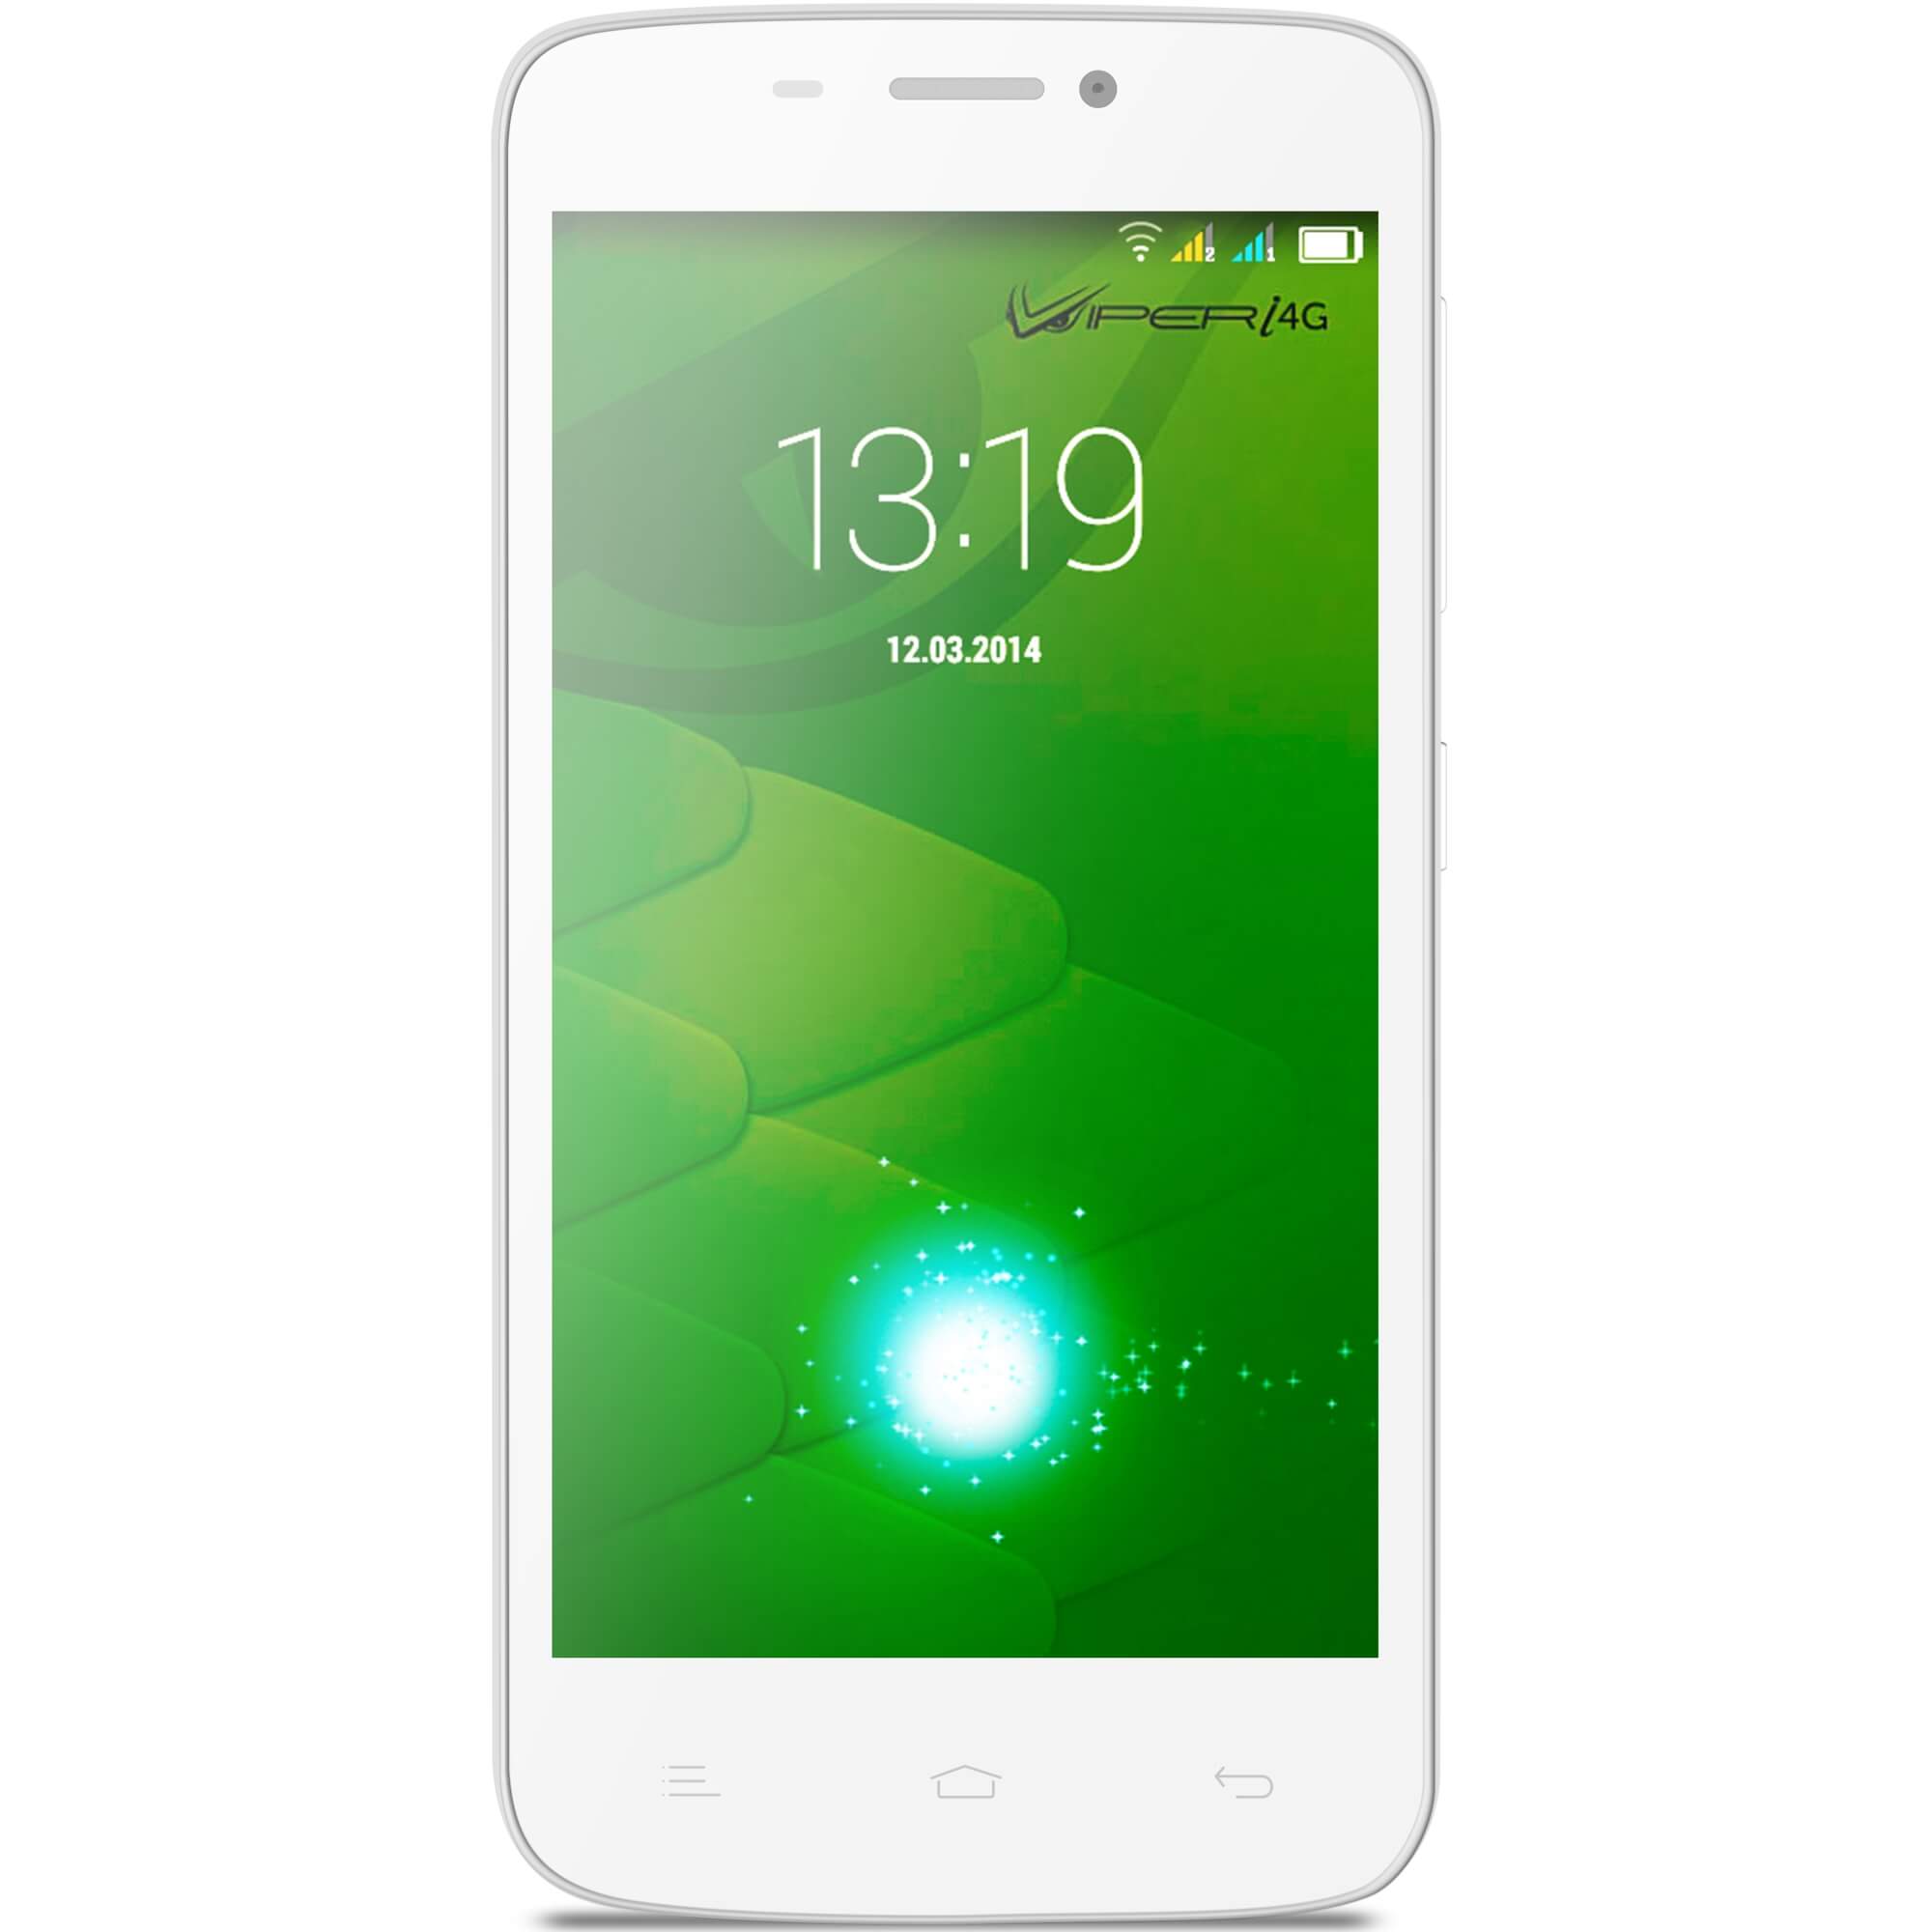  Telefon mobil Allview V1 Viper i4G, 8GB, Dual SIM, Alb 